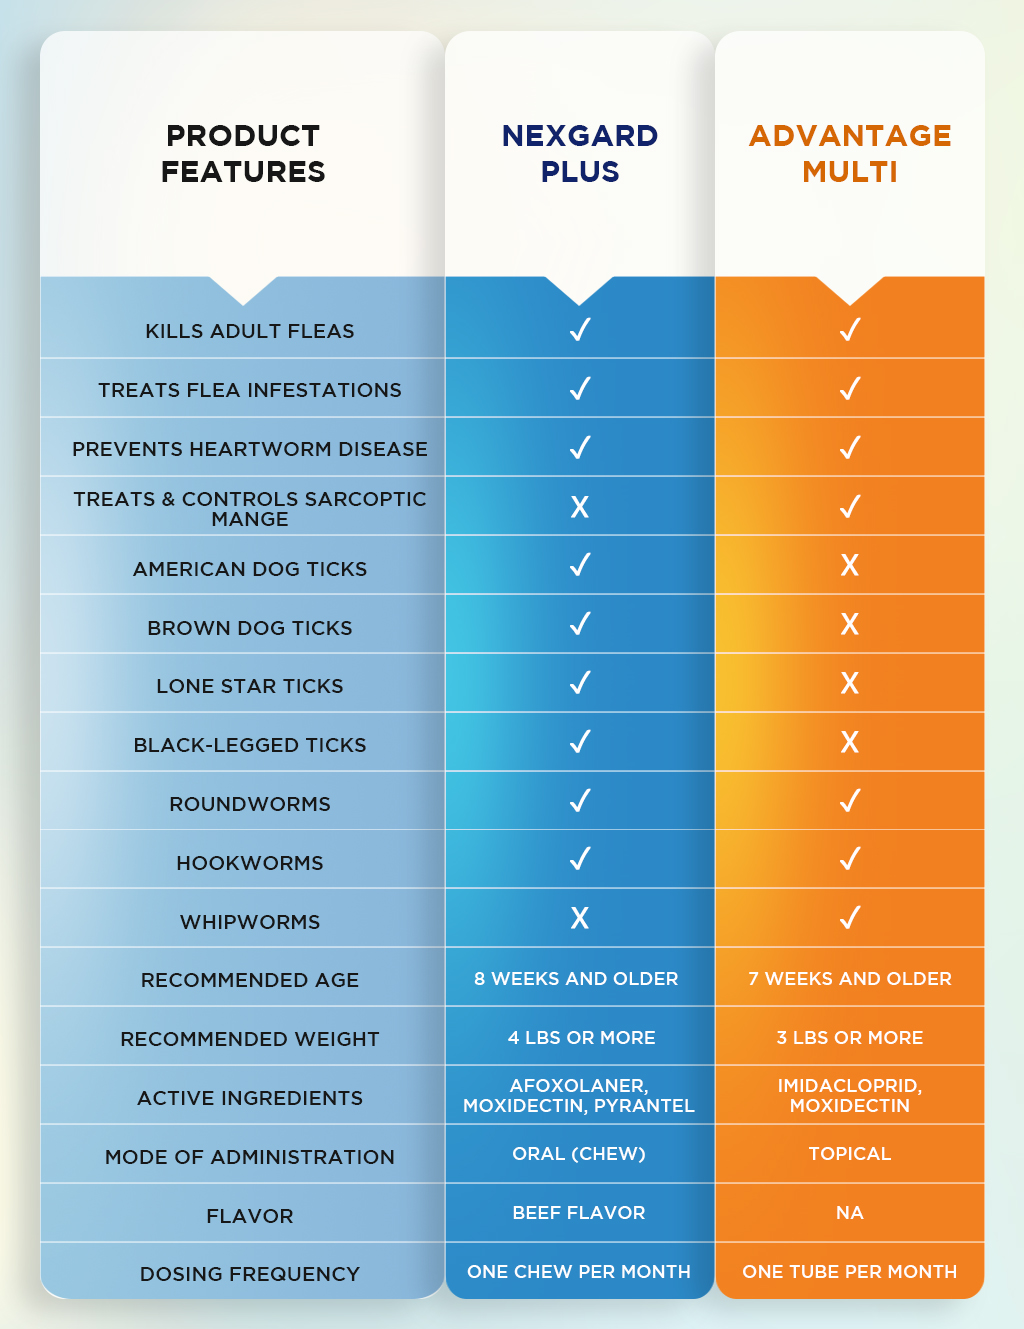 Difference Between Nexgard Plus & Advantage Multi Comparison Chart